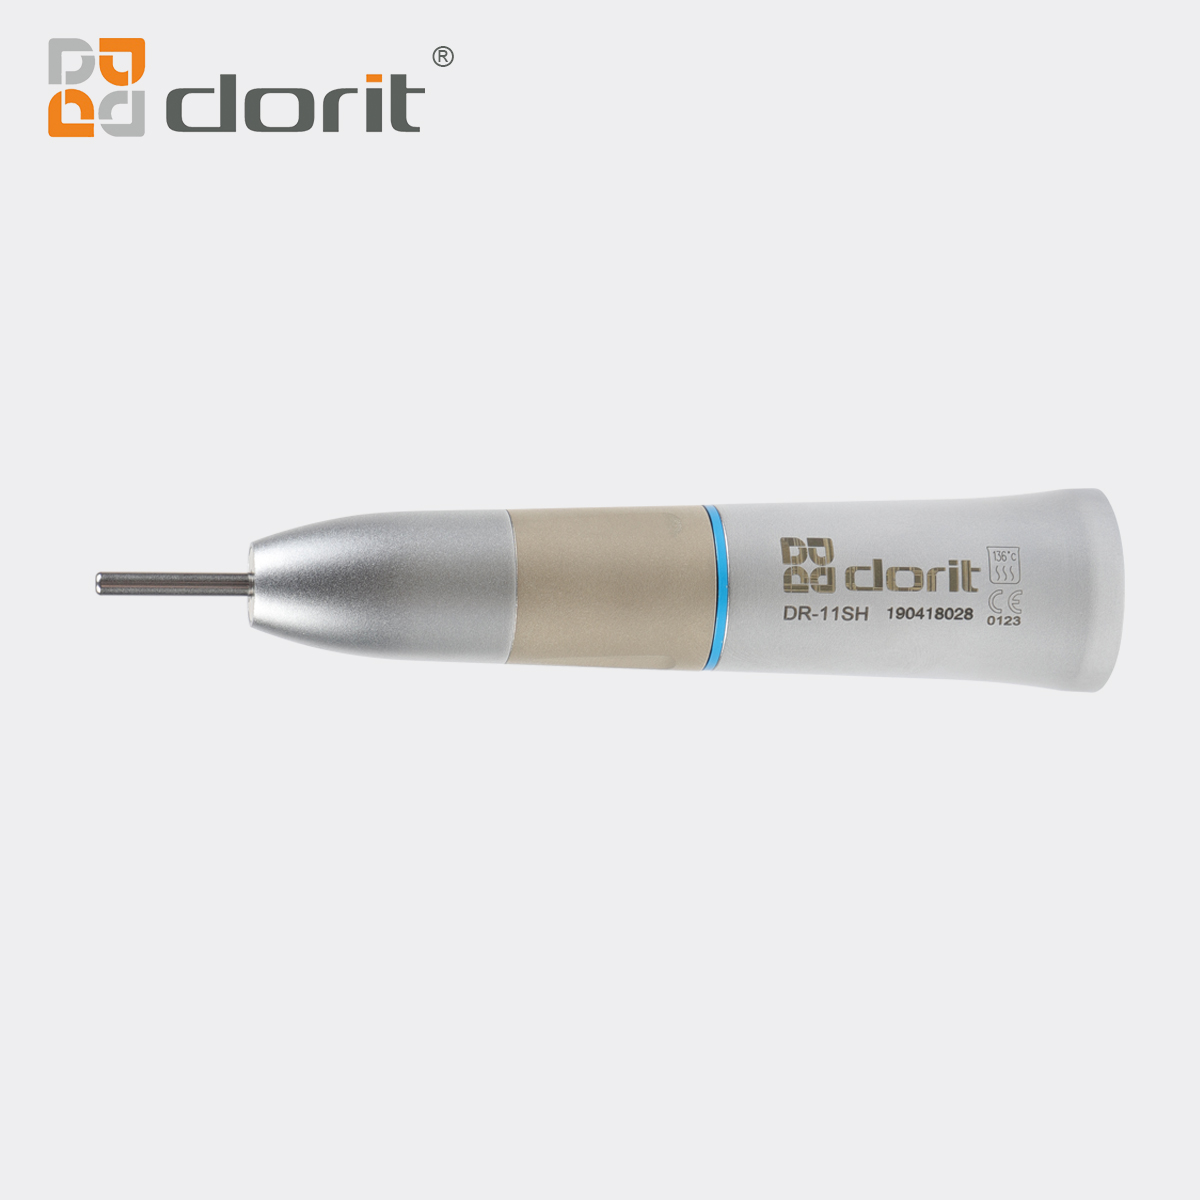 Dorit DR-11SH Low Speed 1:1 Straight Handpiece